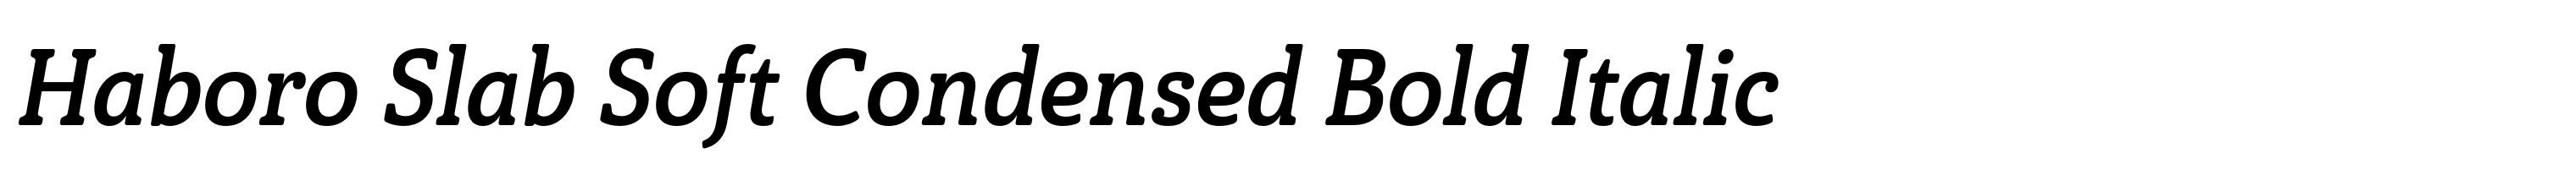 Haboro Slab Soft Condensed Bold Italic